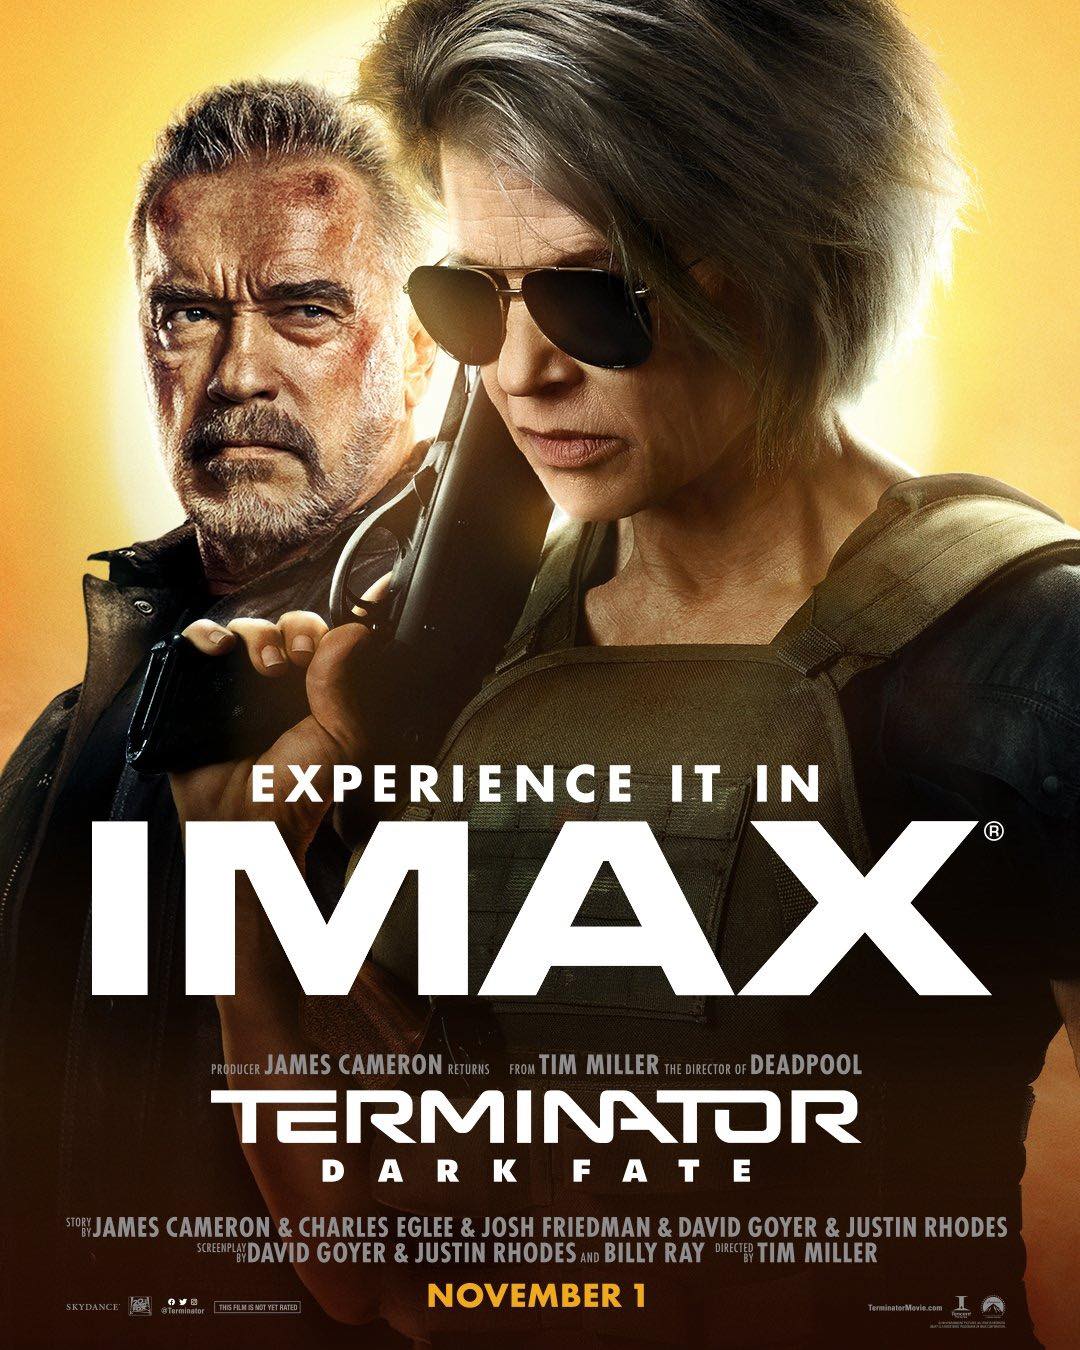 New “Terminator: Dark Fate” Poster & Video Featurettes.